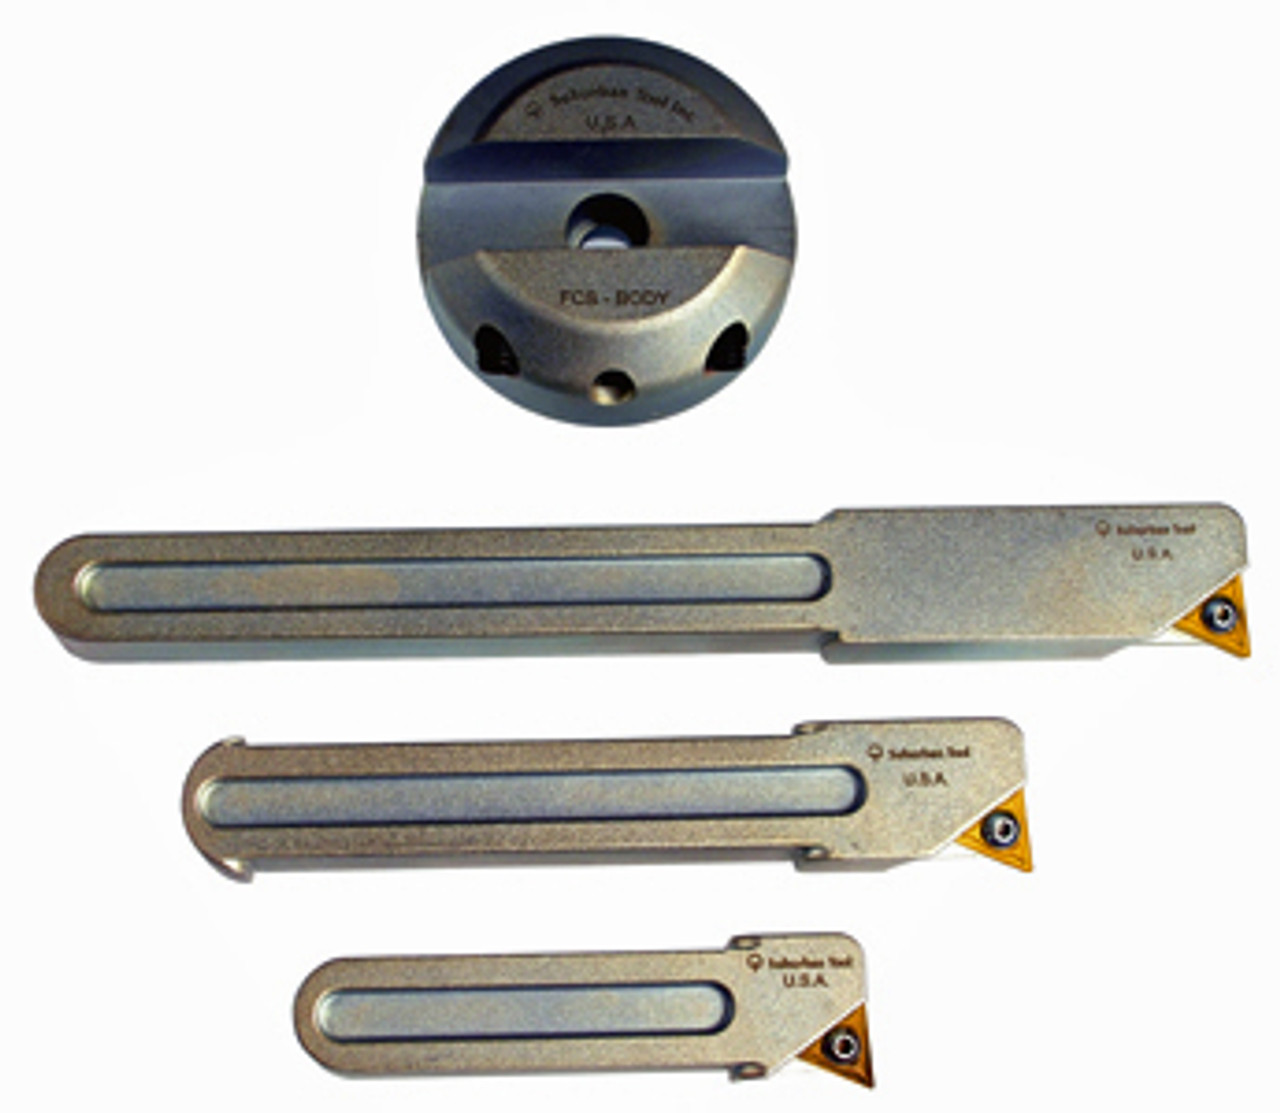 Precise Fly Cutter Head 5/16 - FC-R8 - Light Tool Supply